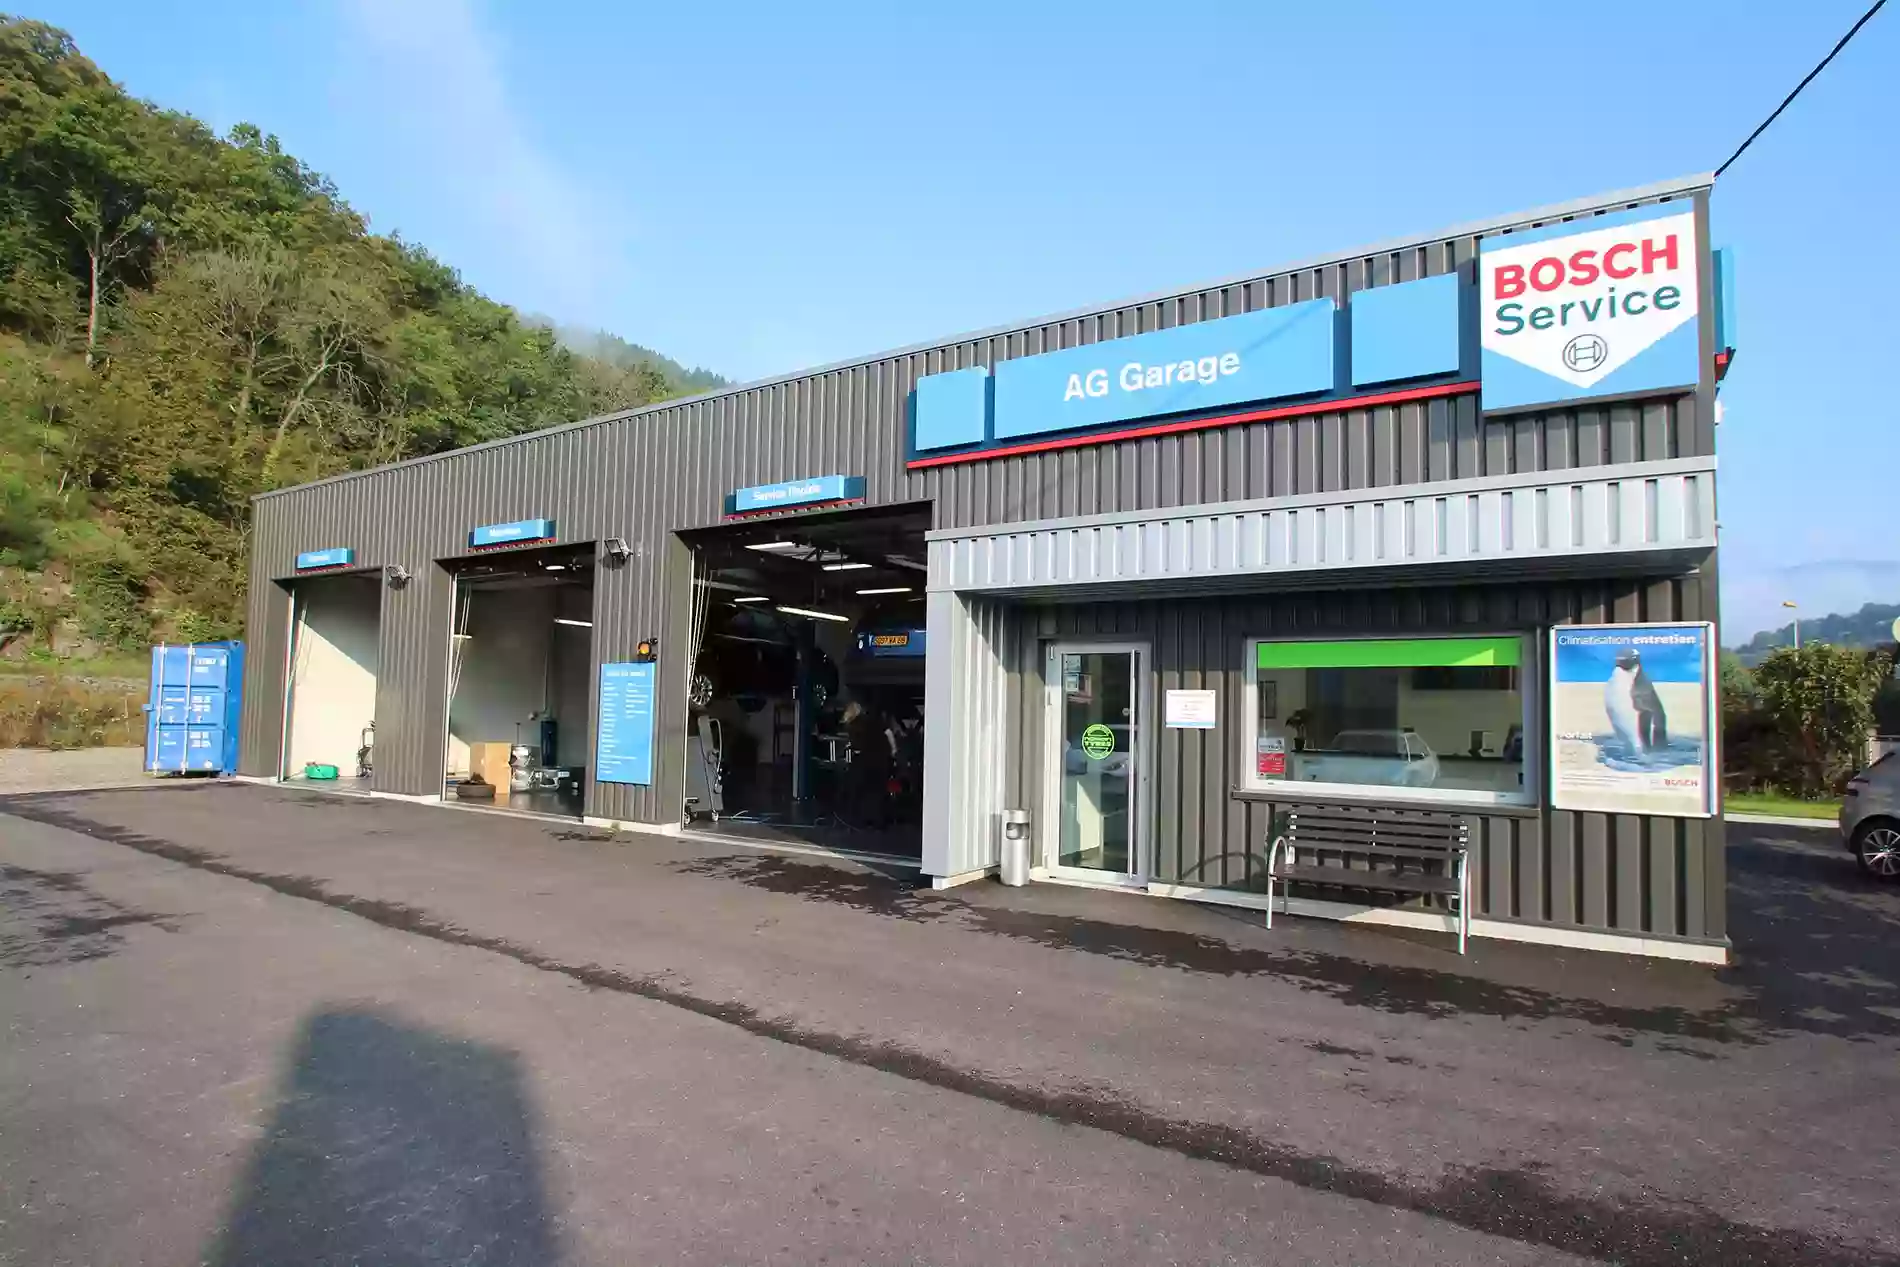 AG Garage - Bosch Car Service